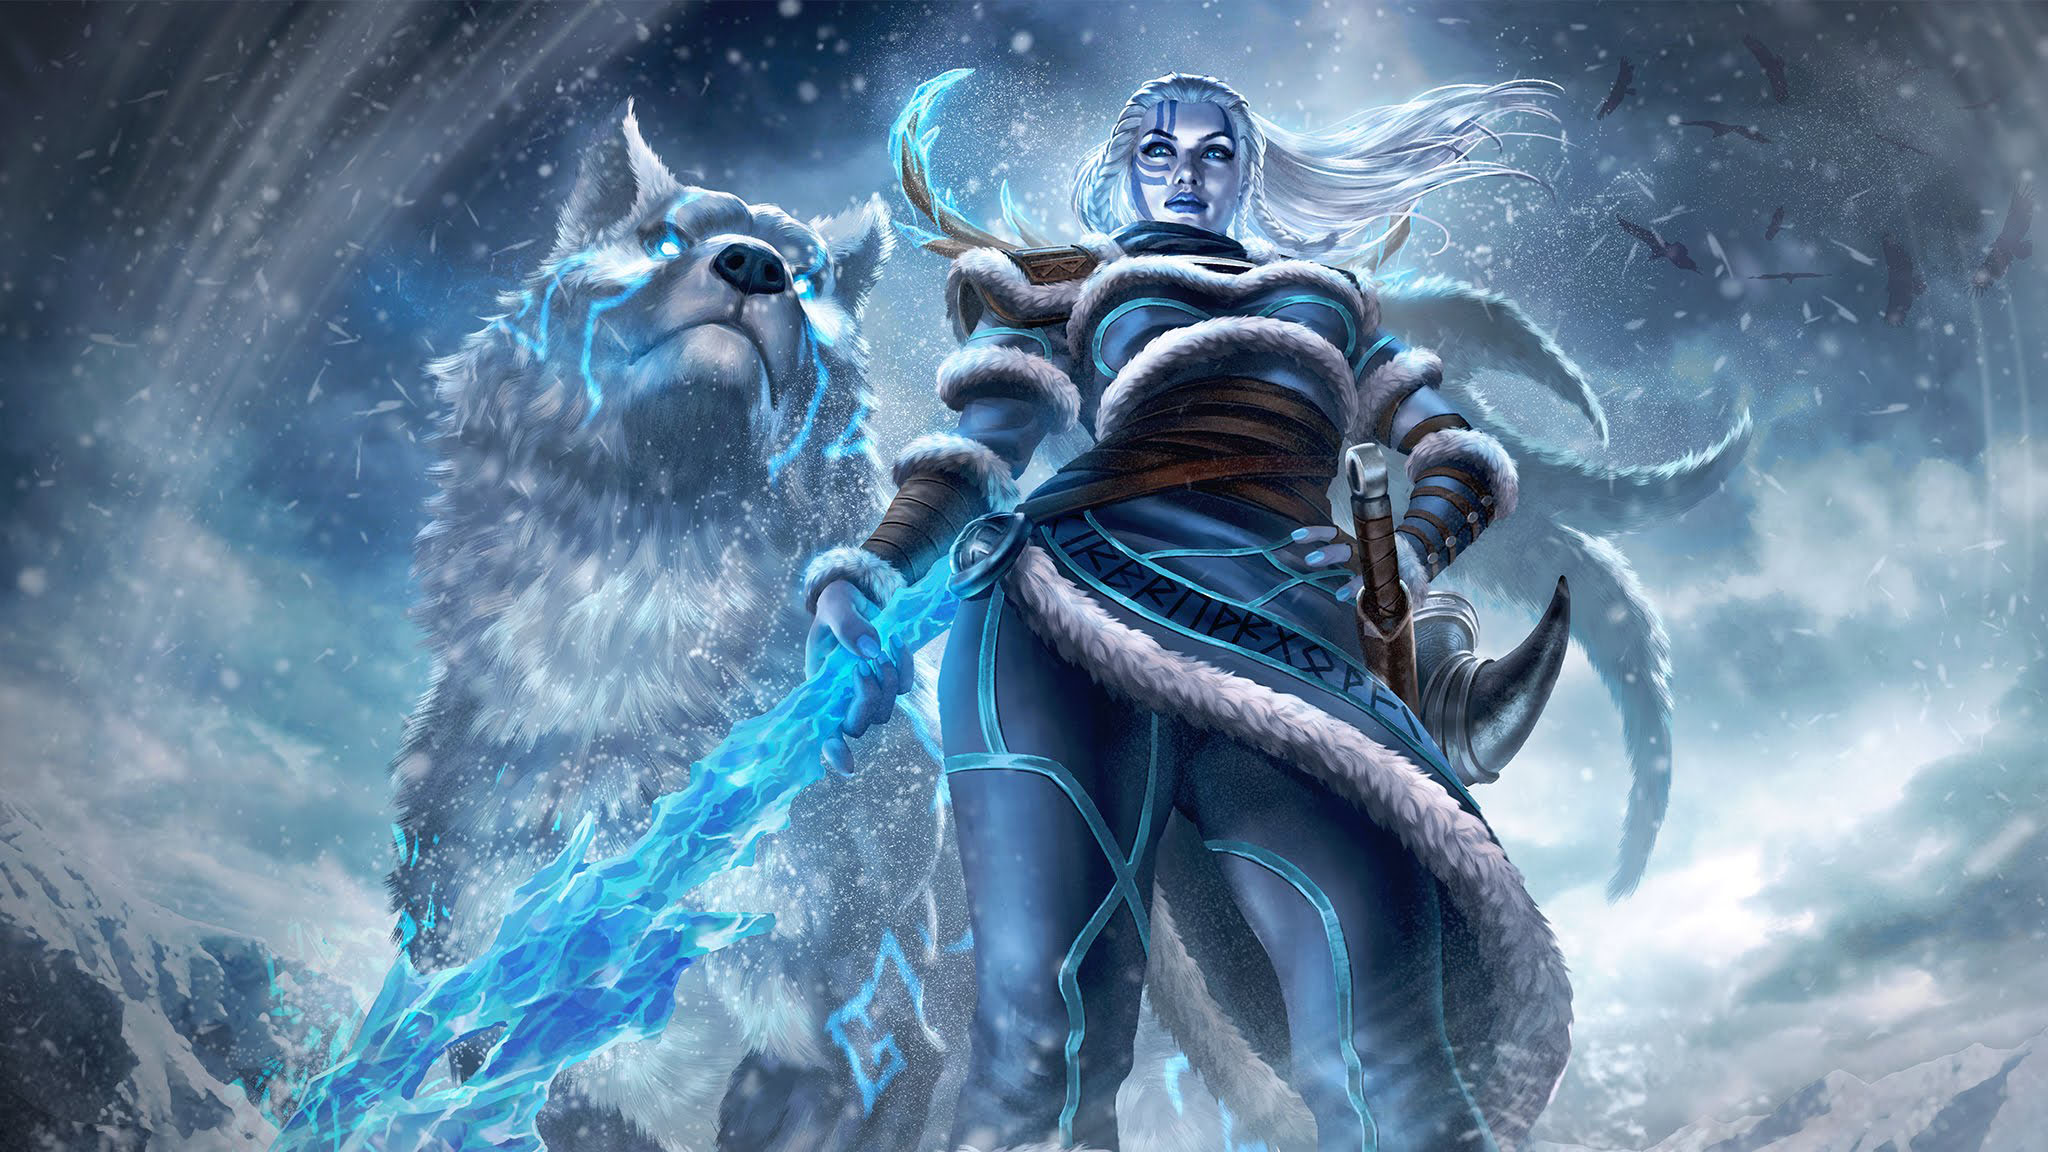 Skadi the Goddess of Winter from SMITE - Game Art